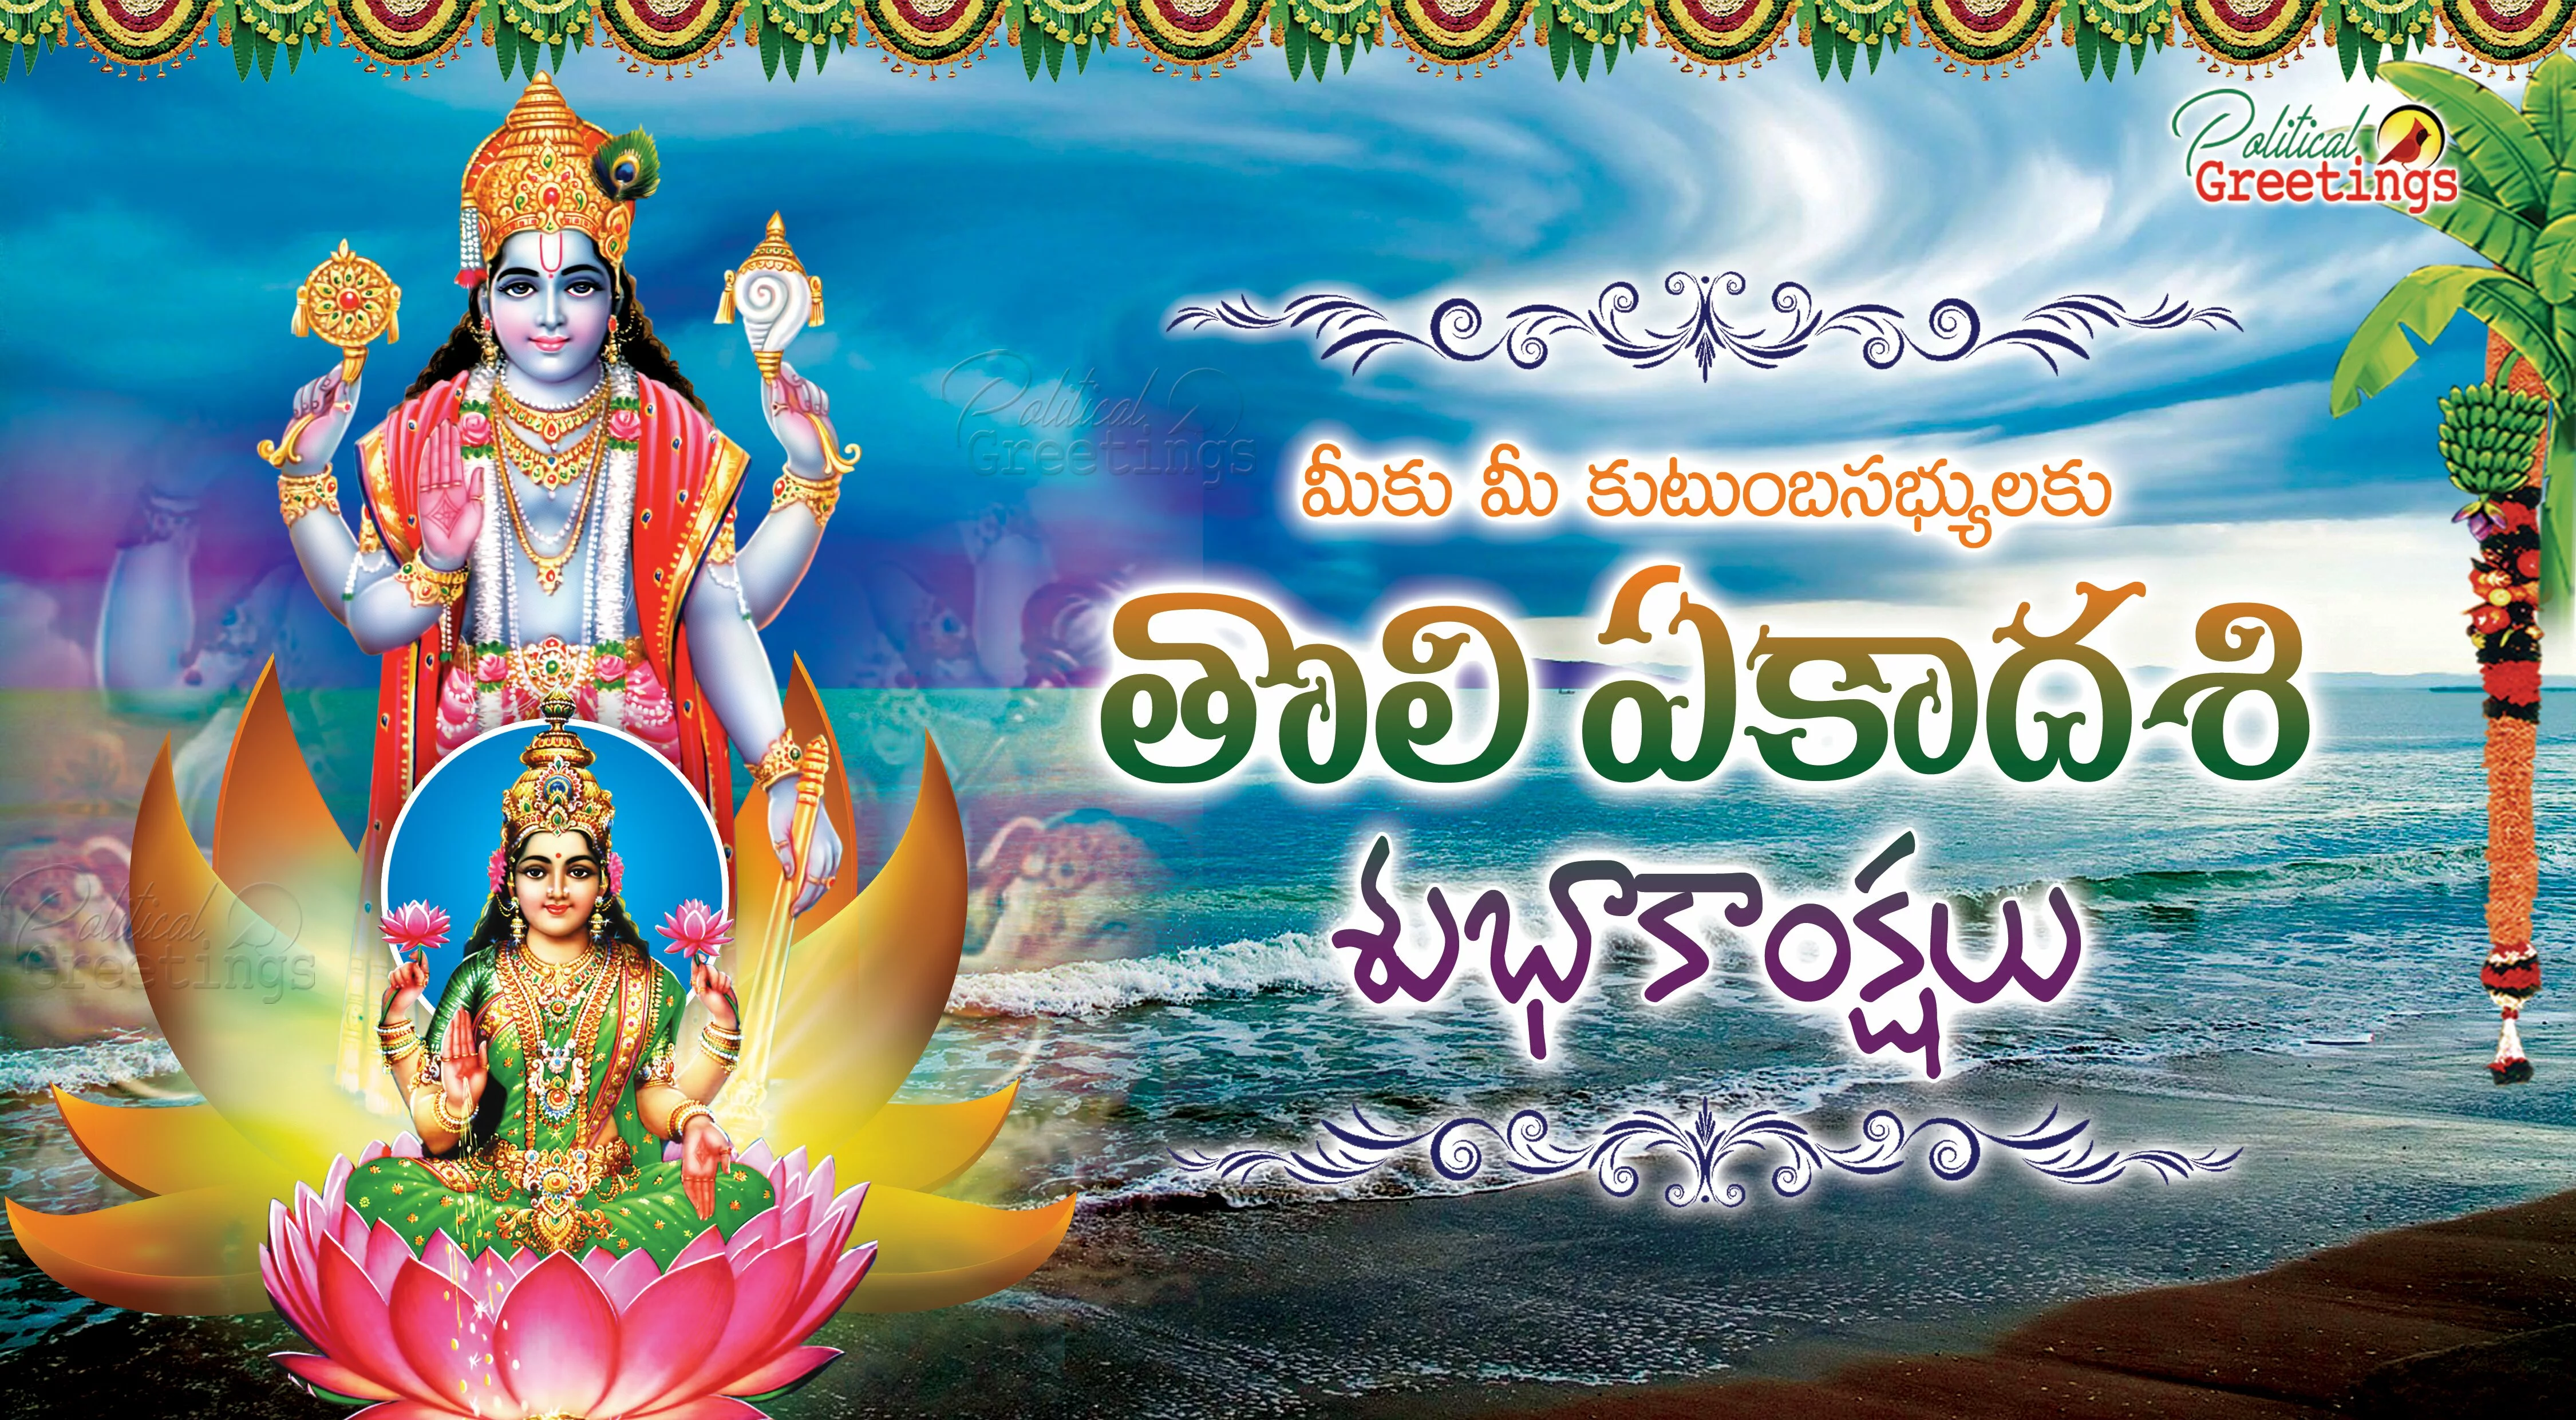 Toli Ekadashi Telugu Greetings with Lord Vishnu Shri mahalakshmi garuda Vahanam images